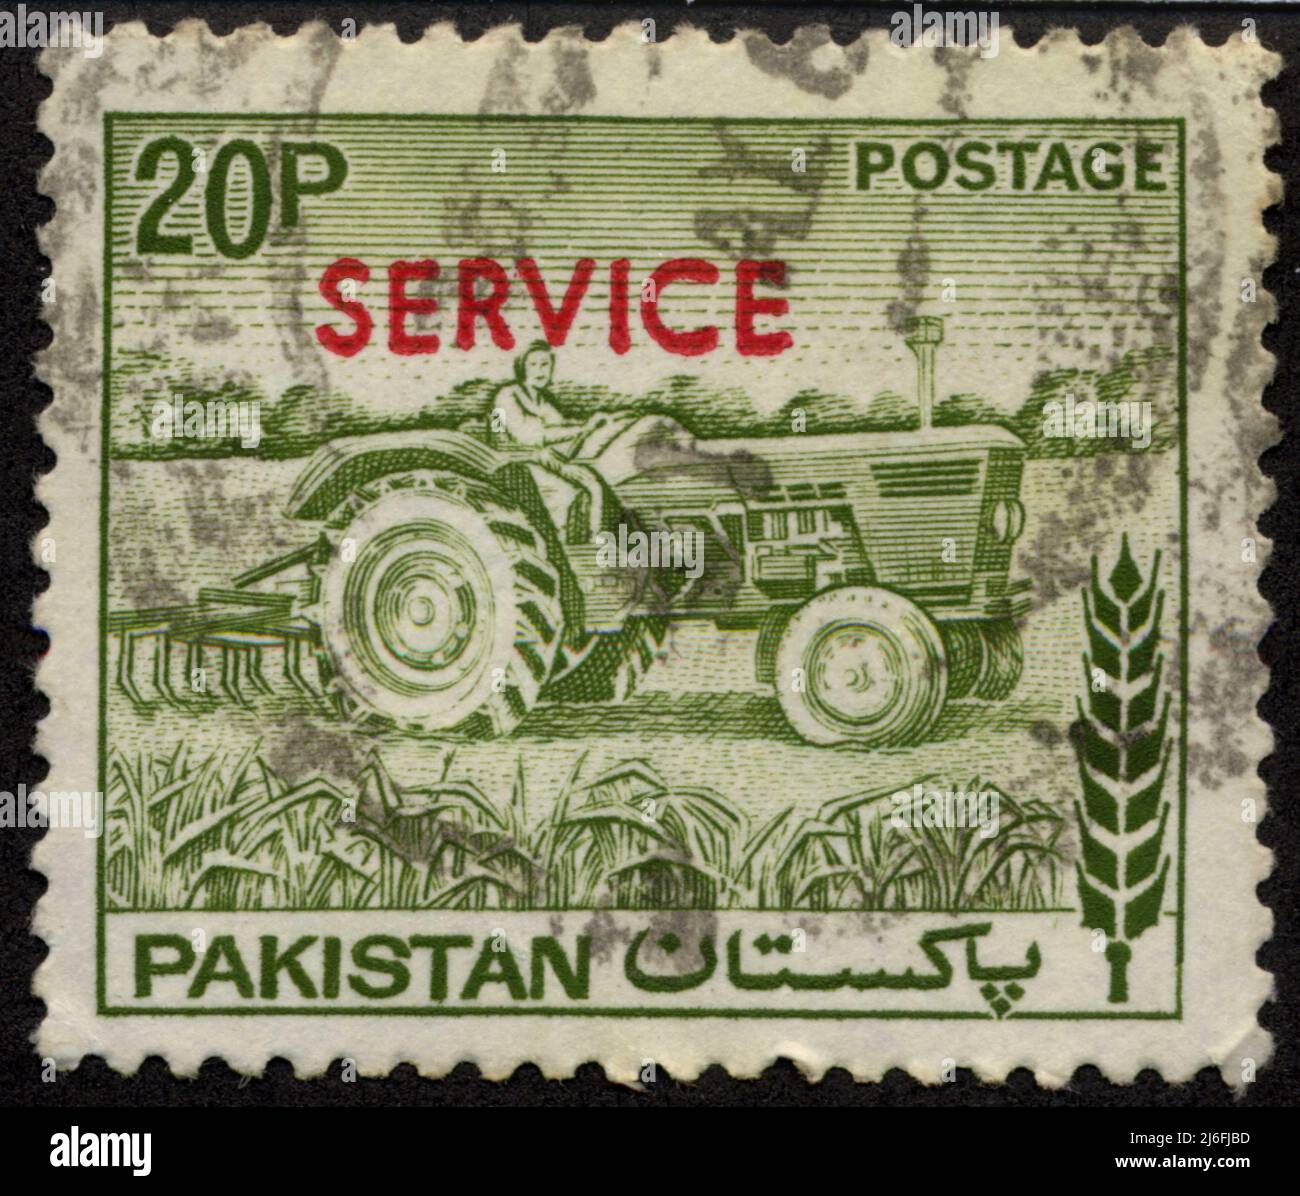 Timbre oblitéré Pakistan, 20p, Porto, Service, Stockfoto